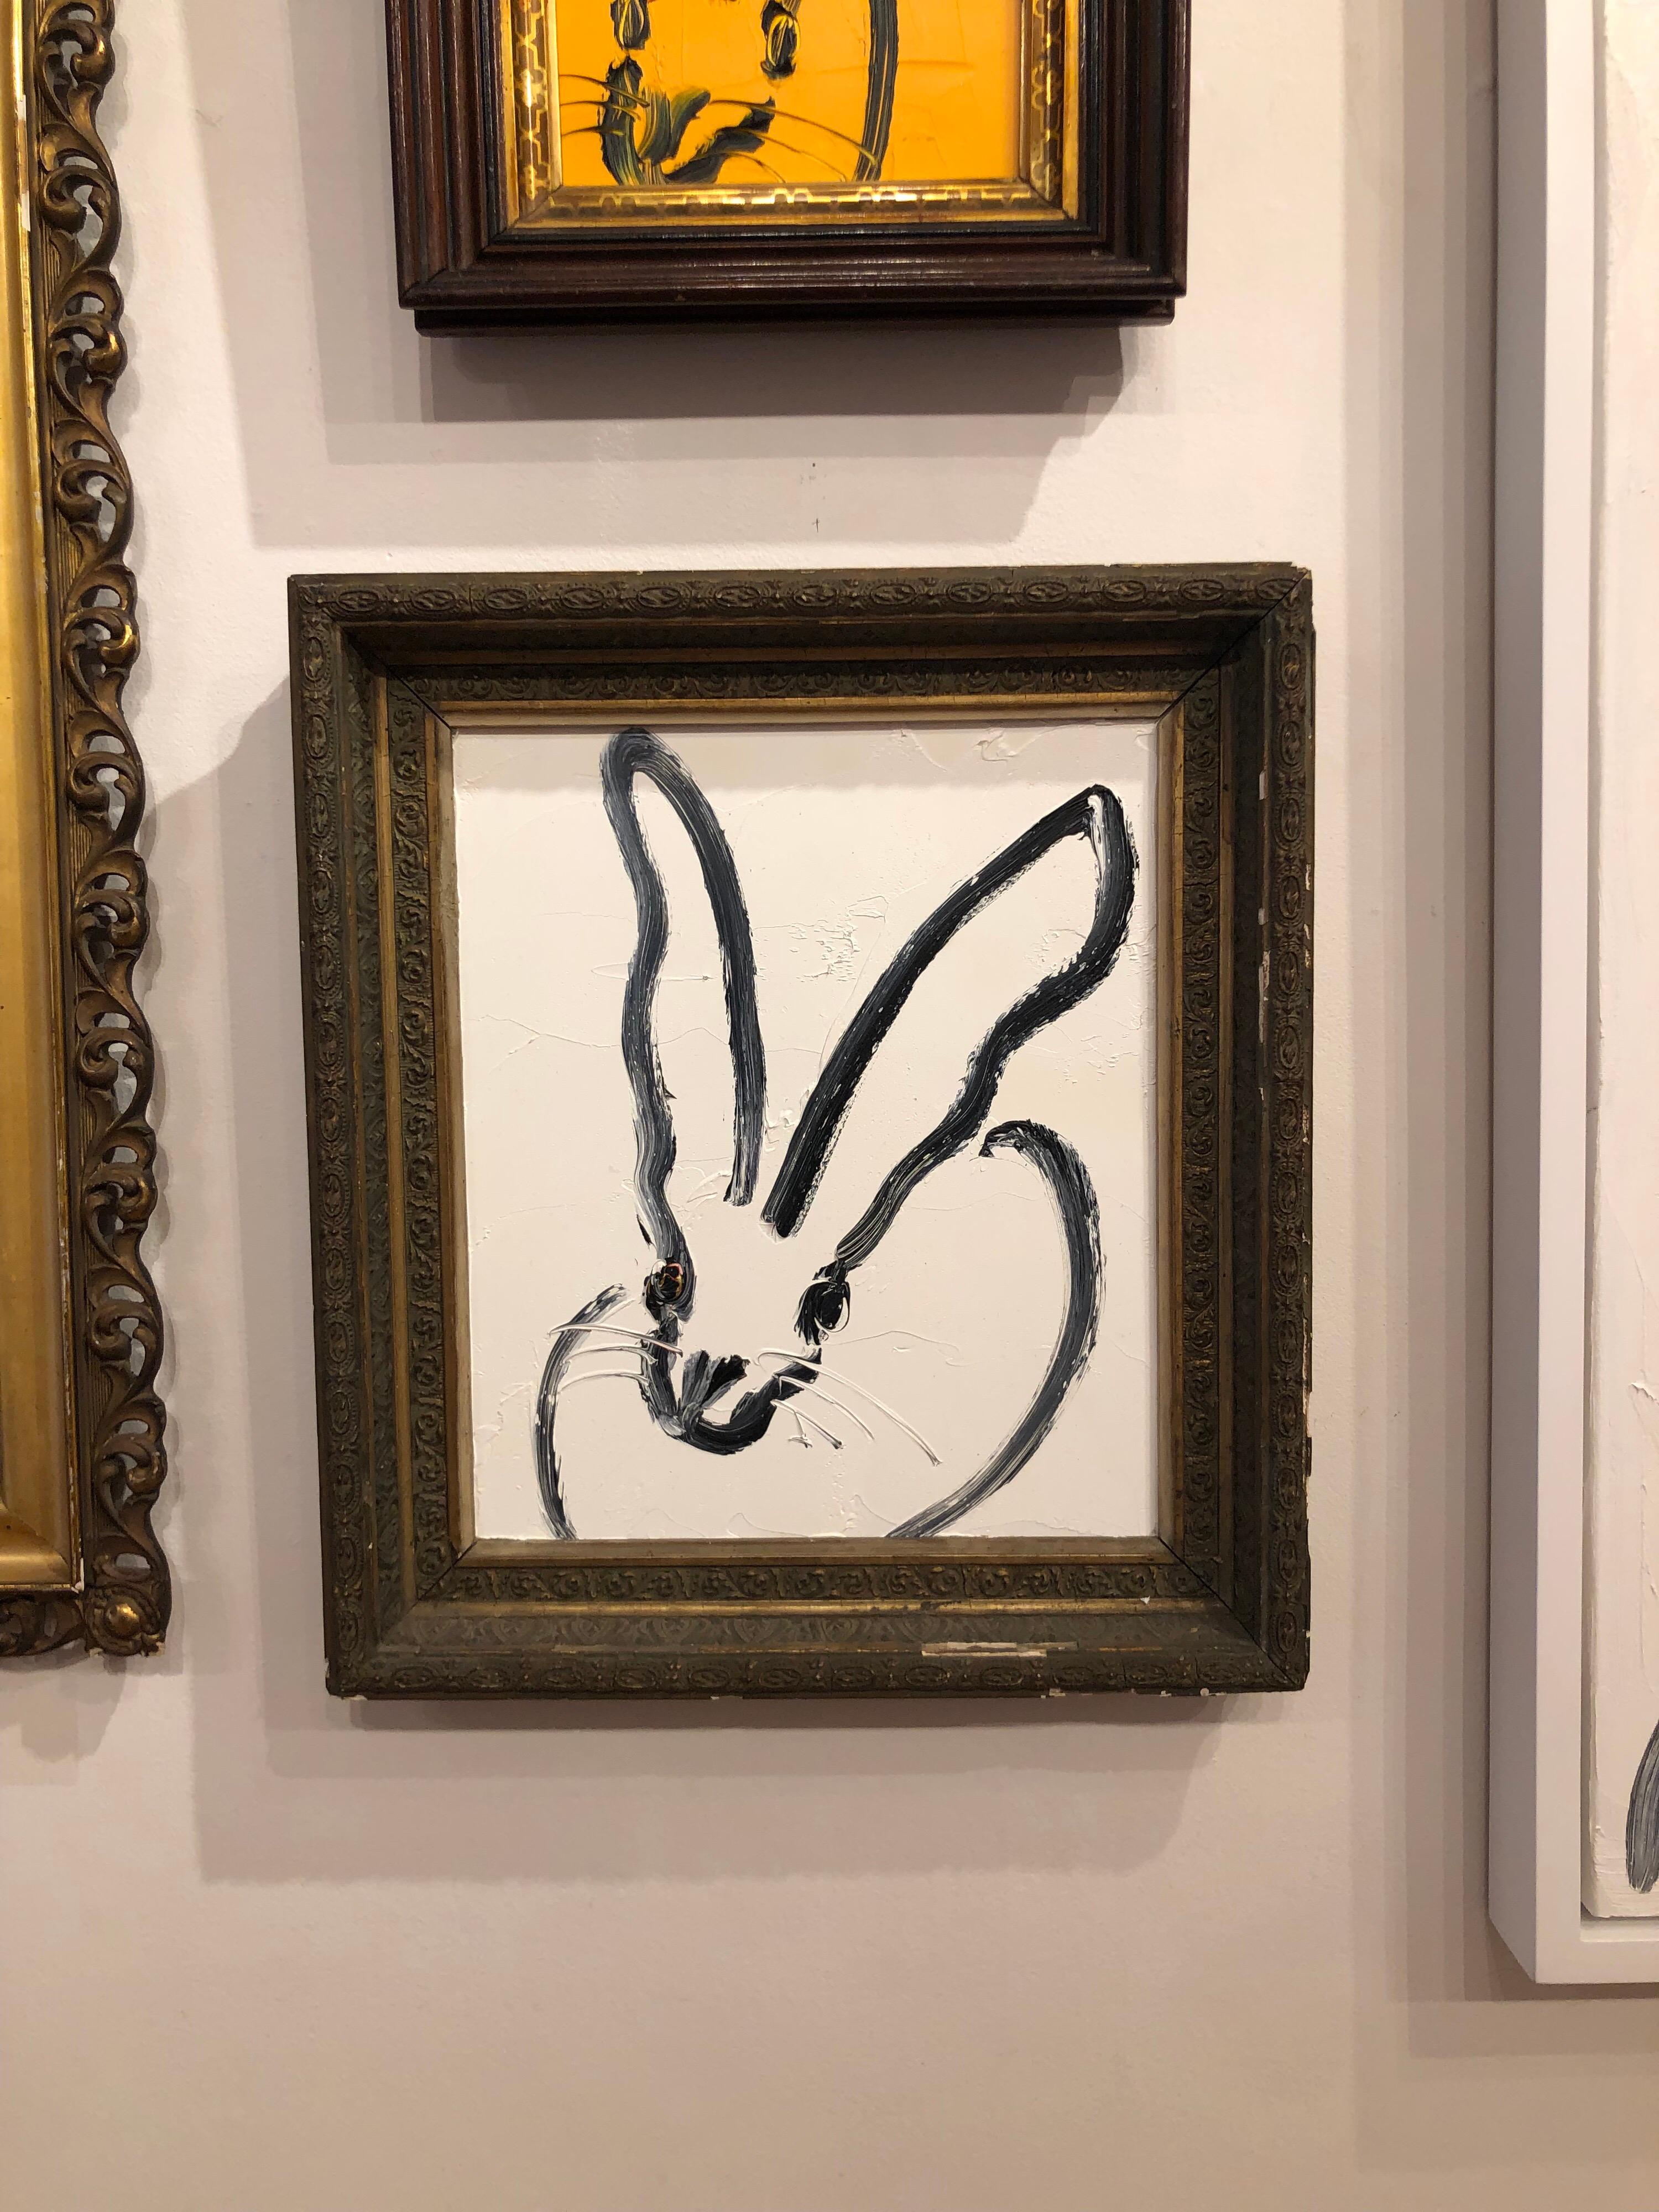 Artist:  Slonem, Hunt
Title:  White Bunny
Series:  Bunnies
Date:  2018
Medium:  Oil on panel
Unframed Dimensions:  14